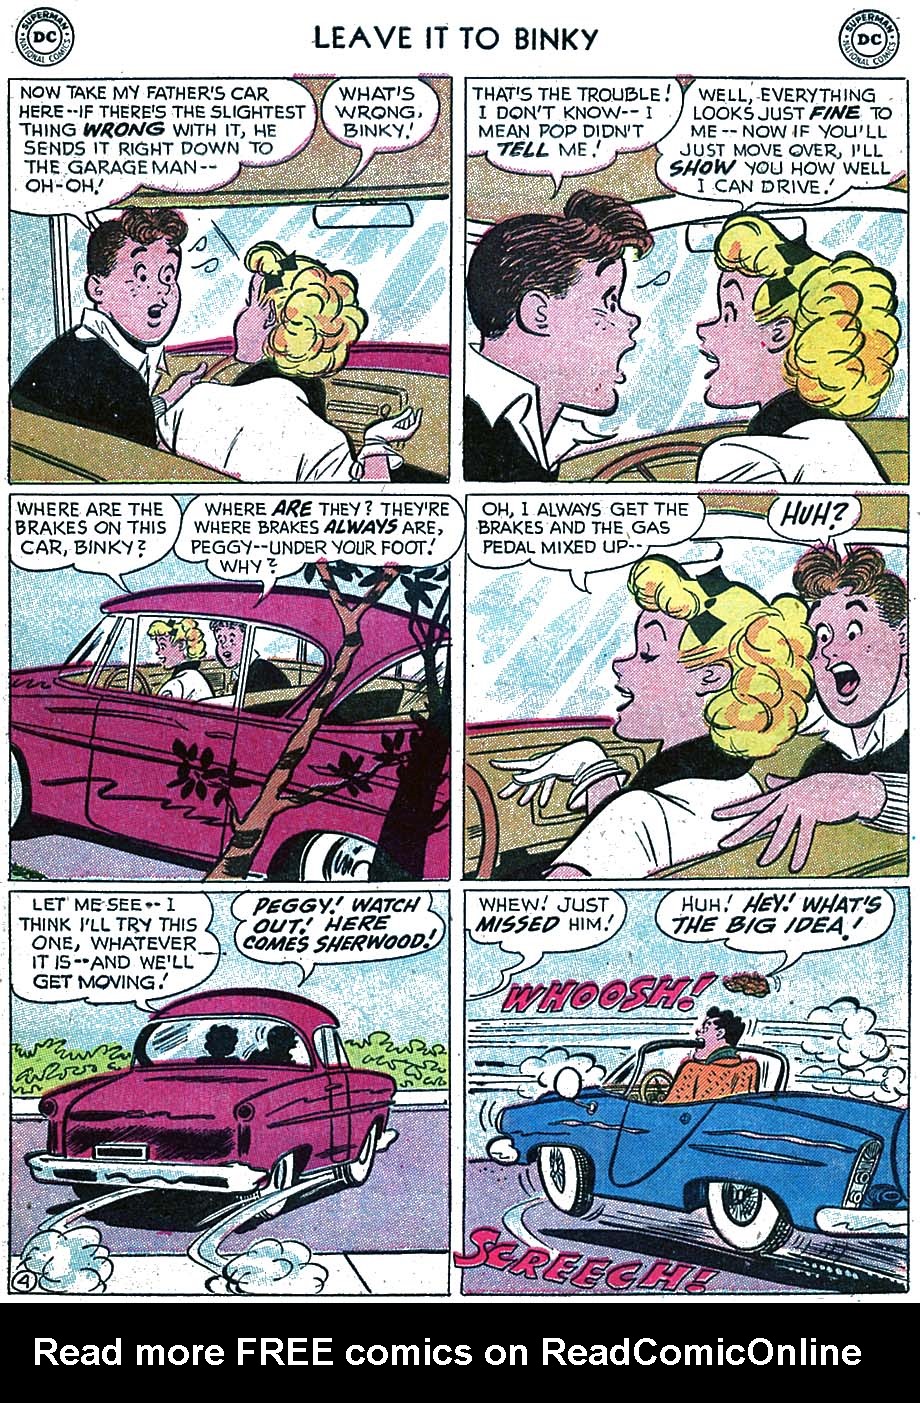 Read online Leave it to Binky comic -  Issue #55 - 31